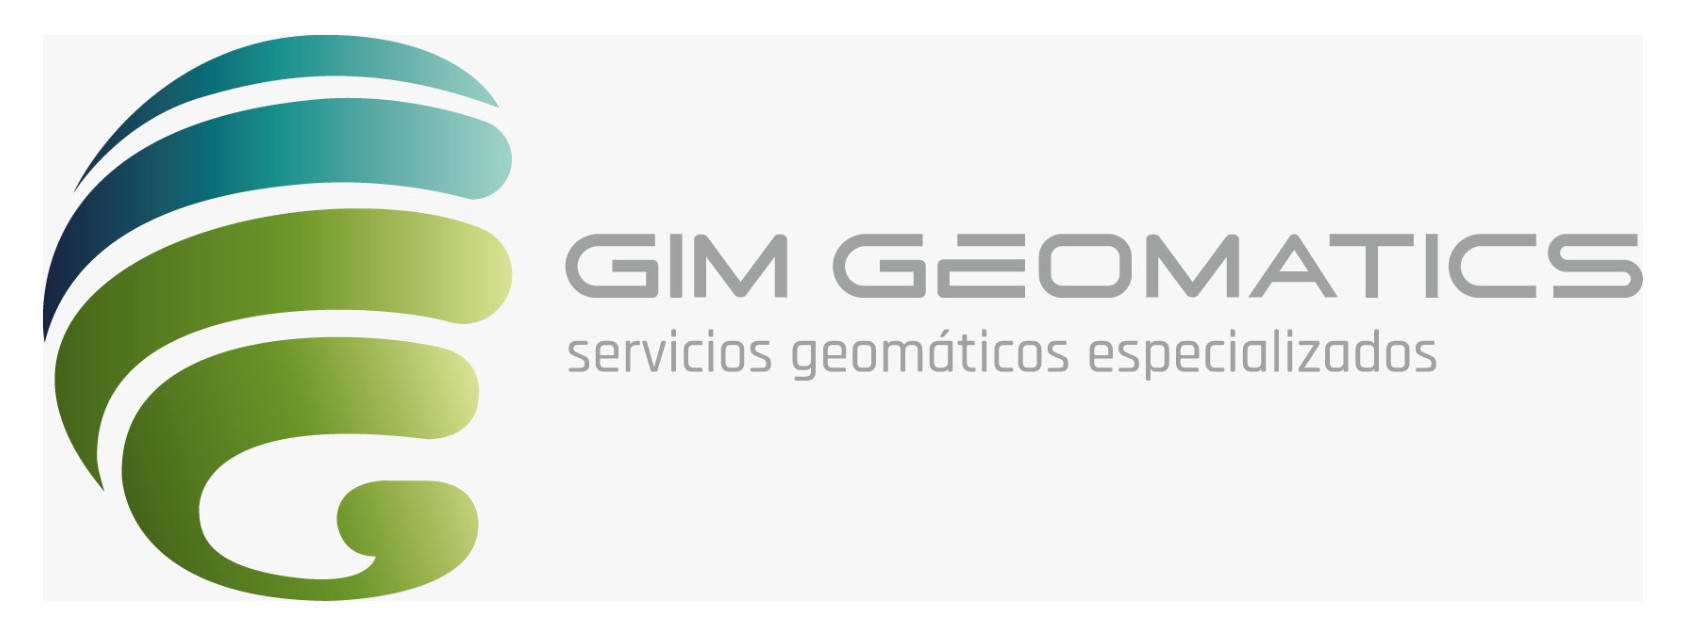 Gim Geomatics